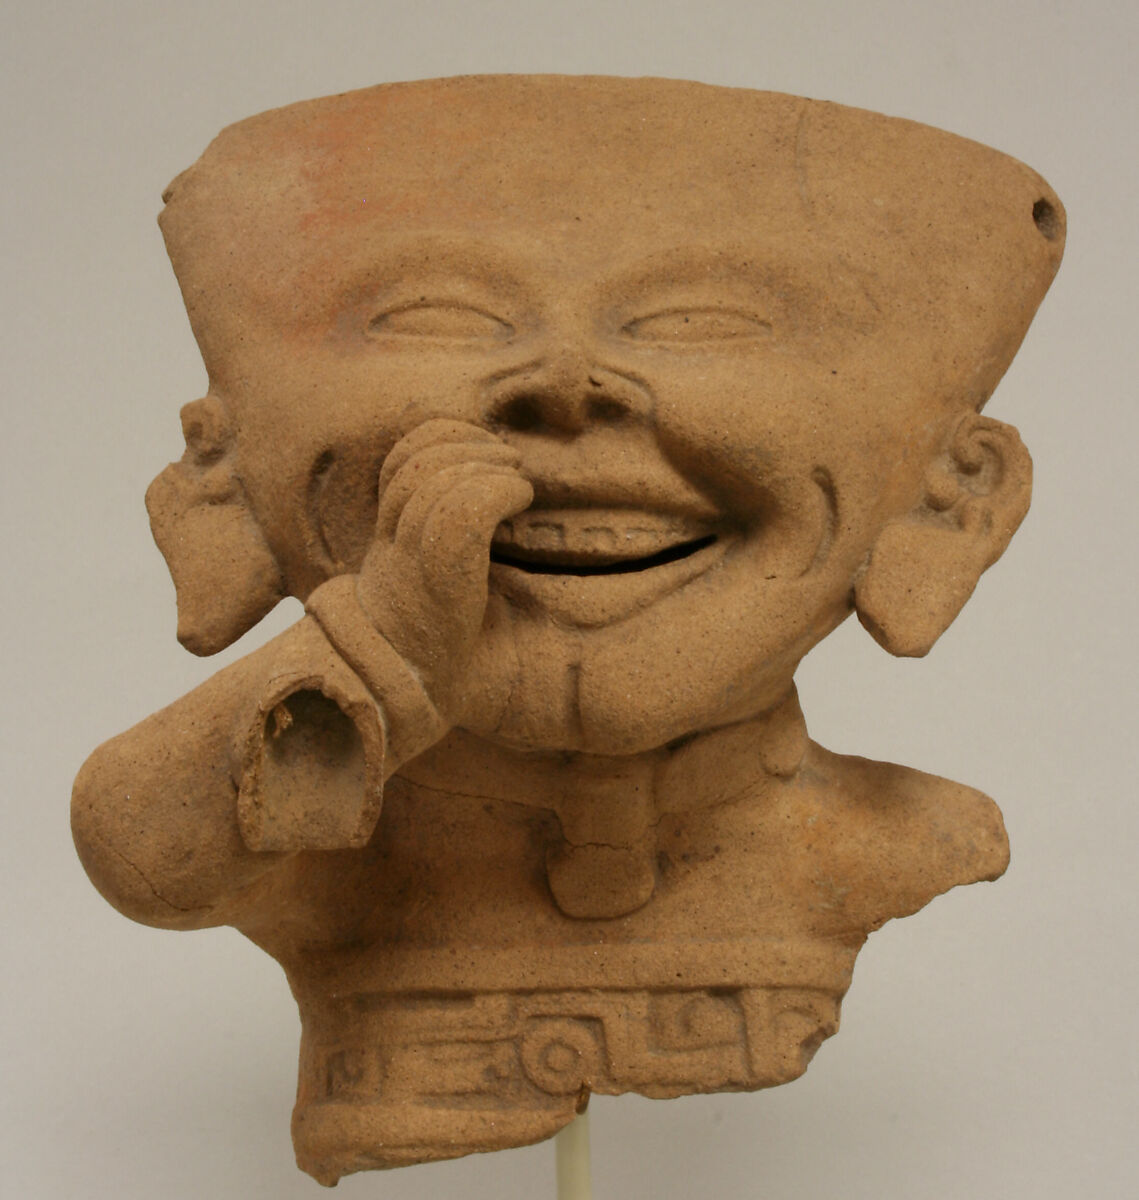 Fragmentary Smiling Figure, Ceramic, Remojadas 